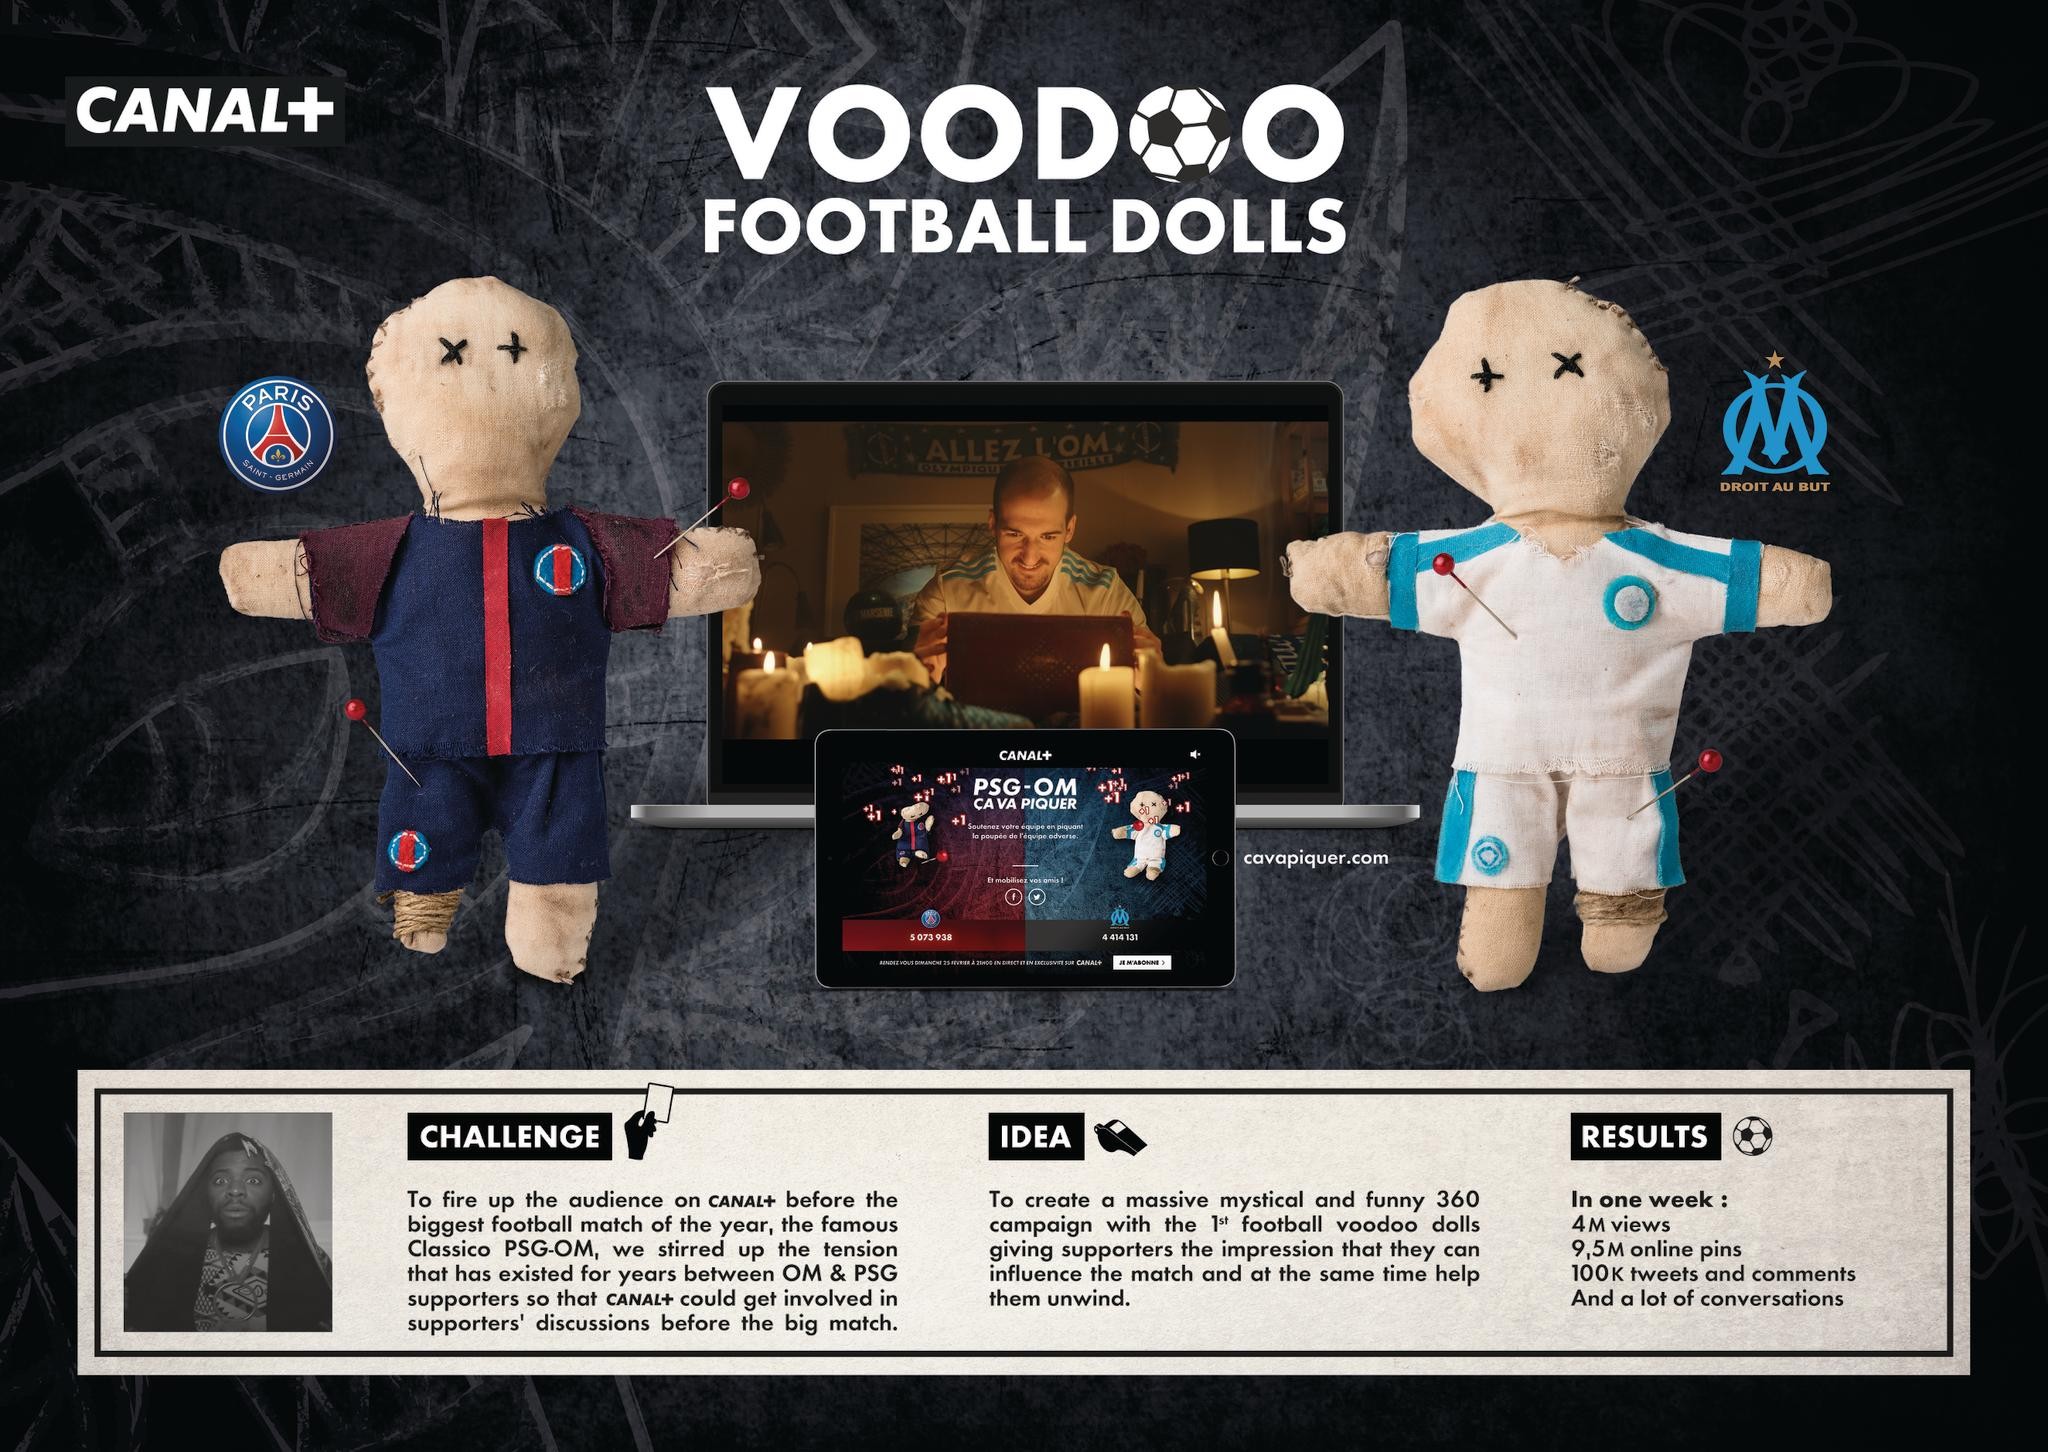 Voodoo football dolls